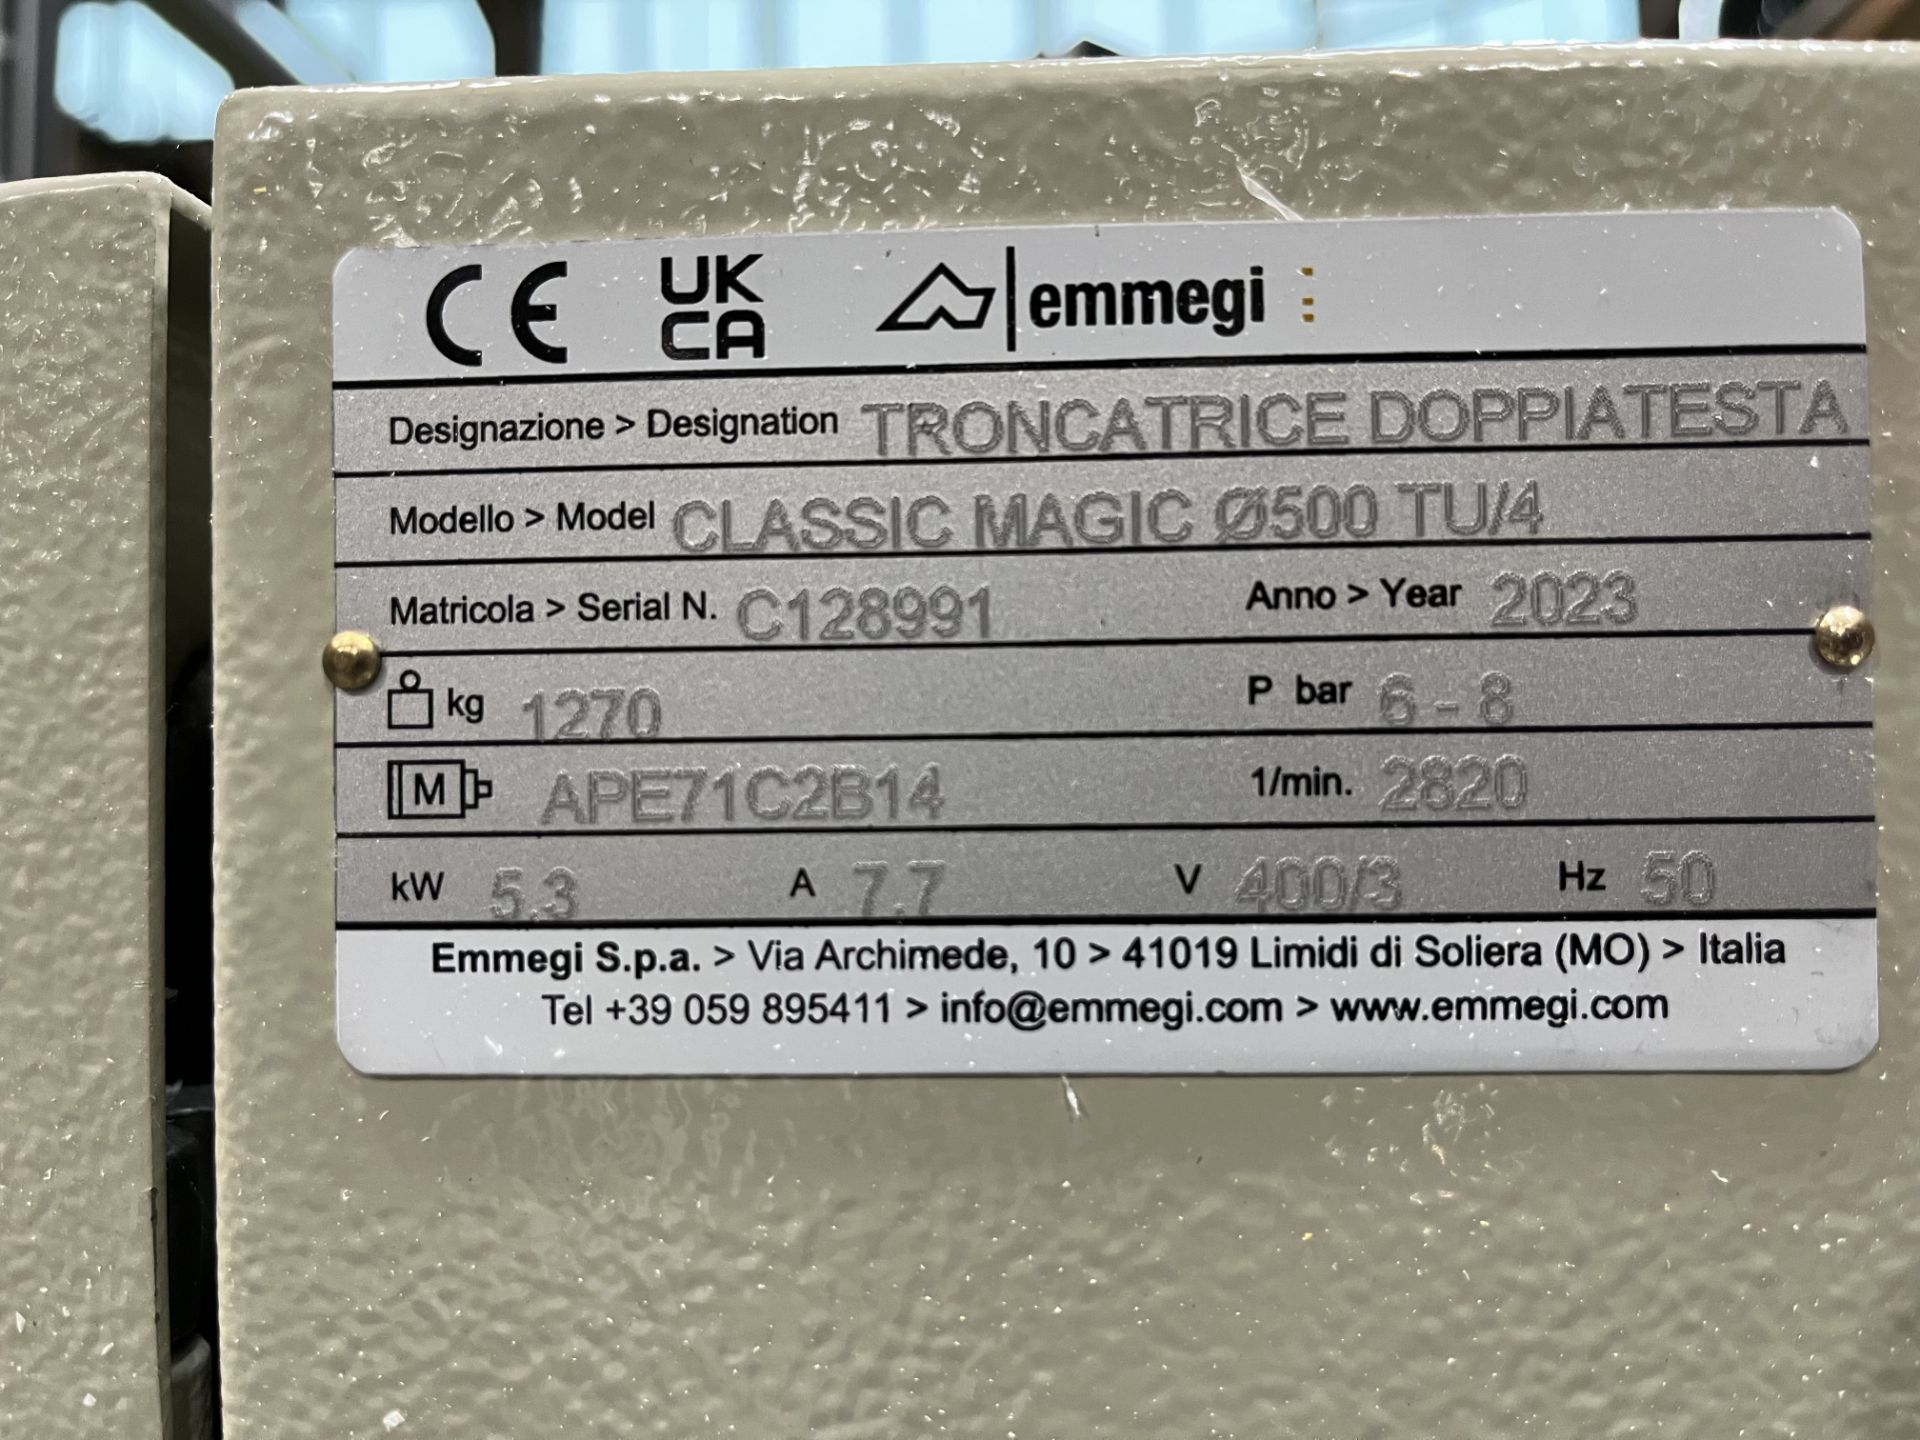 Emmegi Classic Magic 500 Double- Head Cutting Off Machine, Serial No. C128991 (2023) with Emmegi MG4 - Image 2 of 6